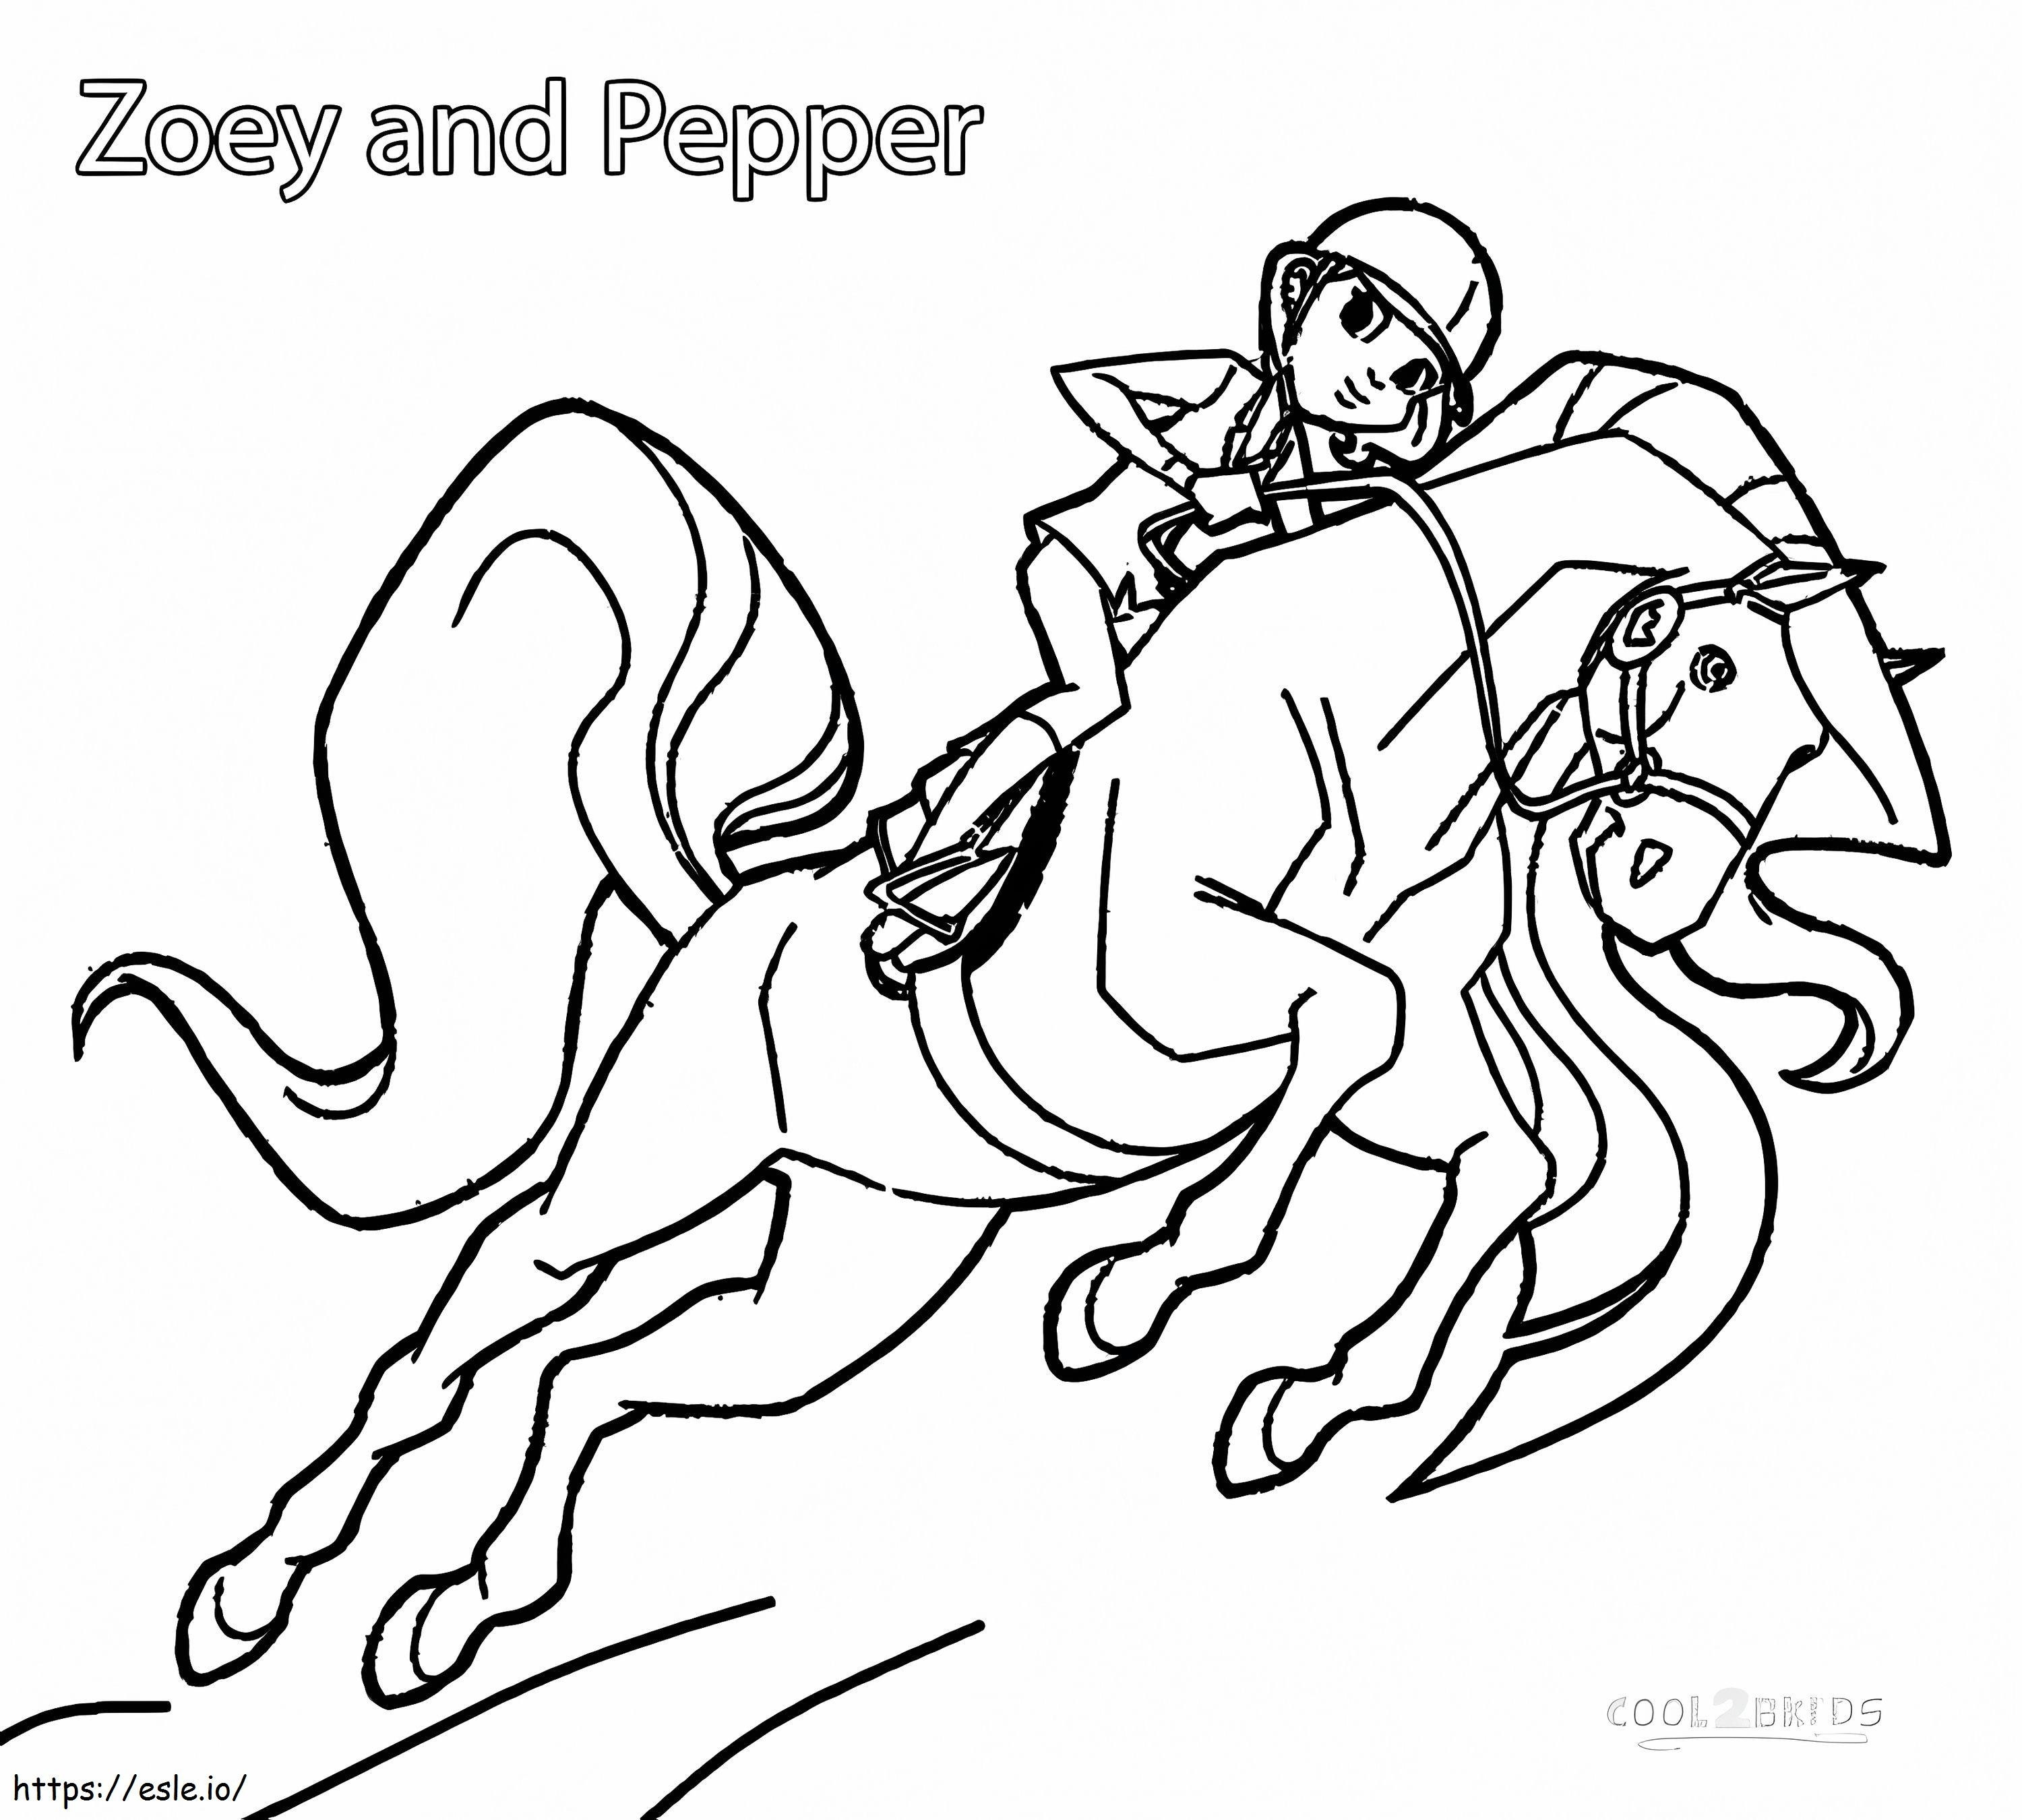 Zoey i Pepper z Horseland kolorowanka